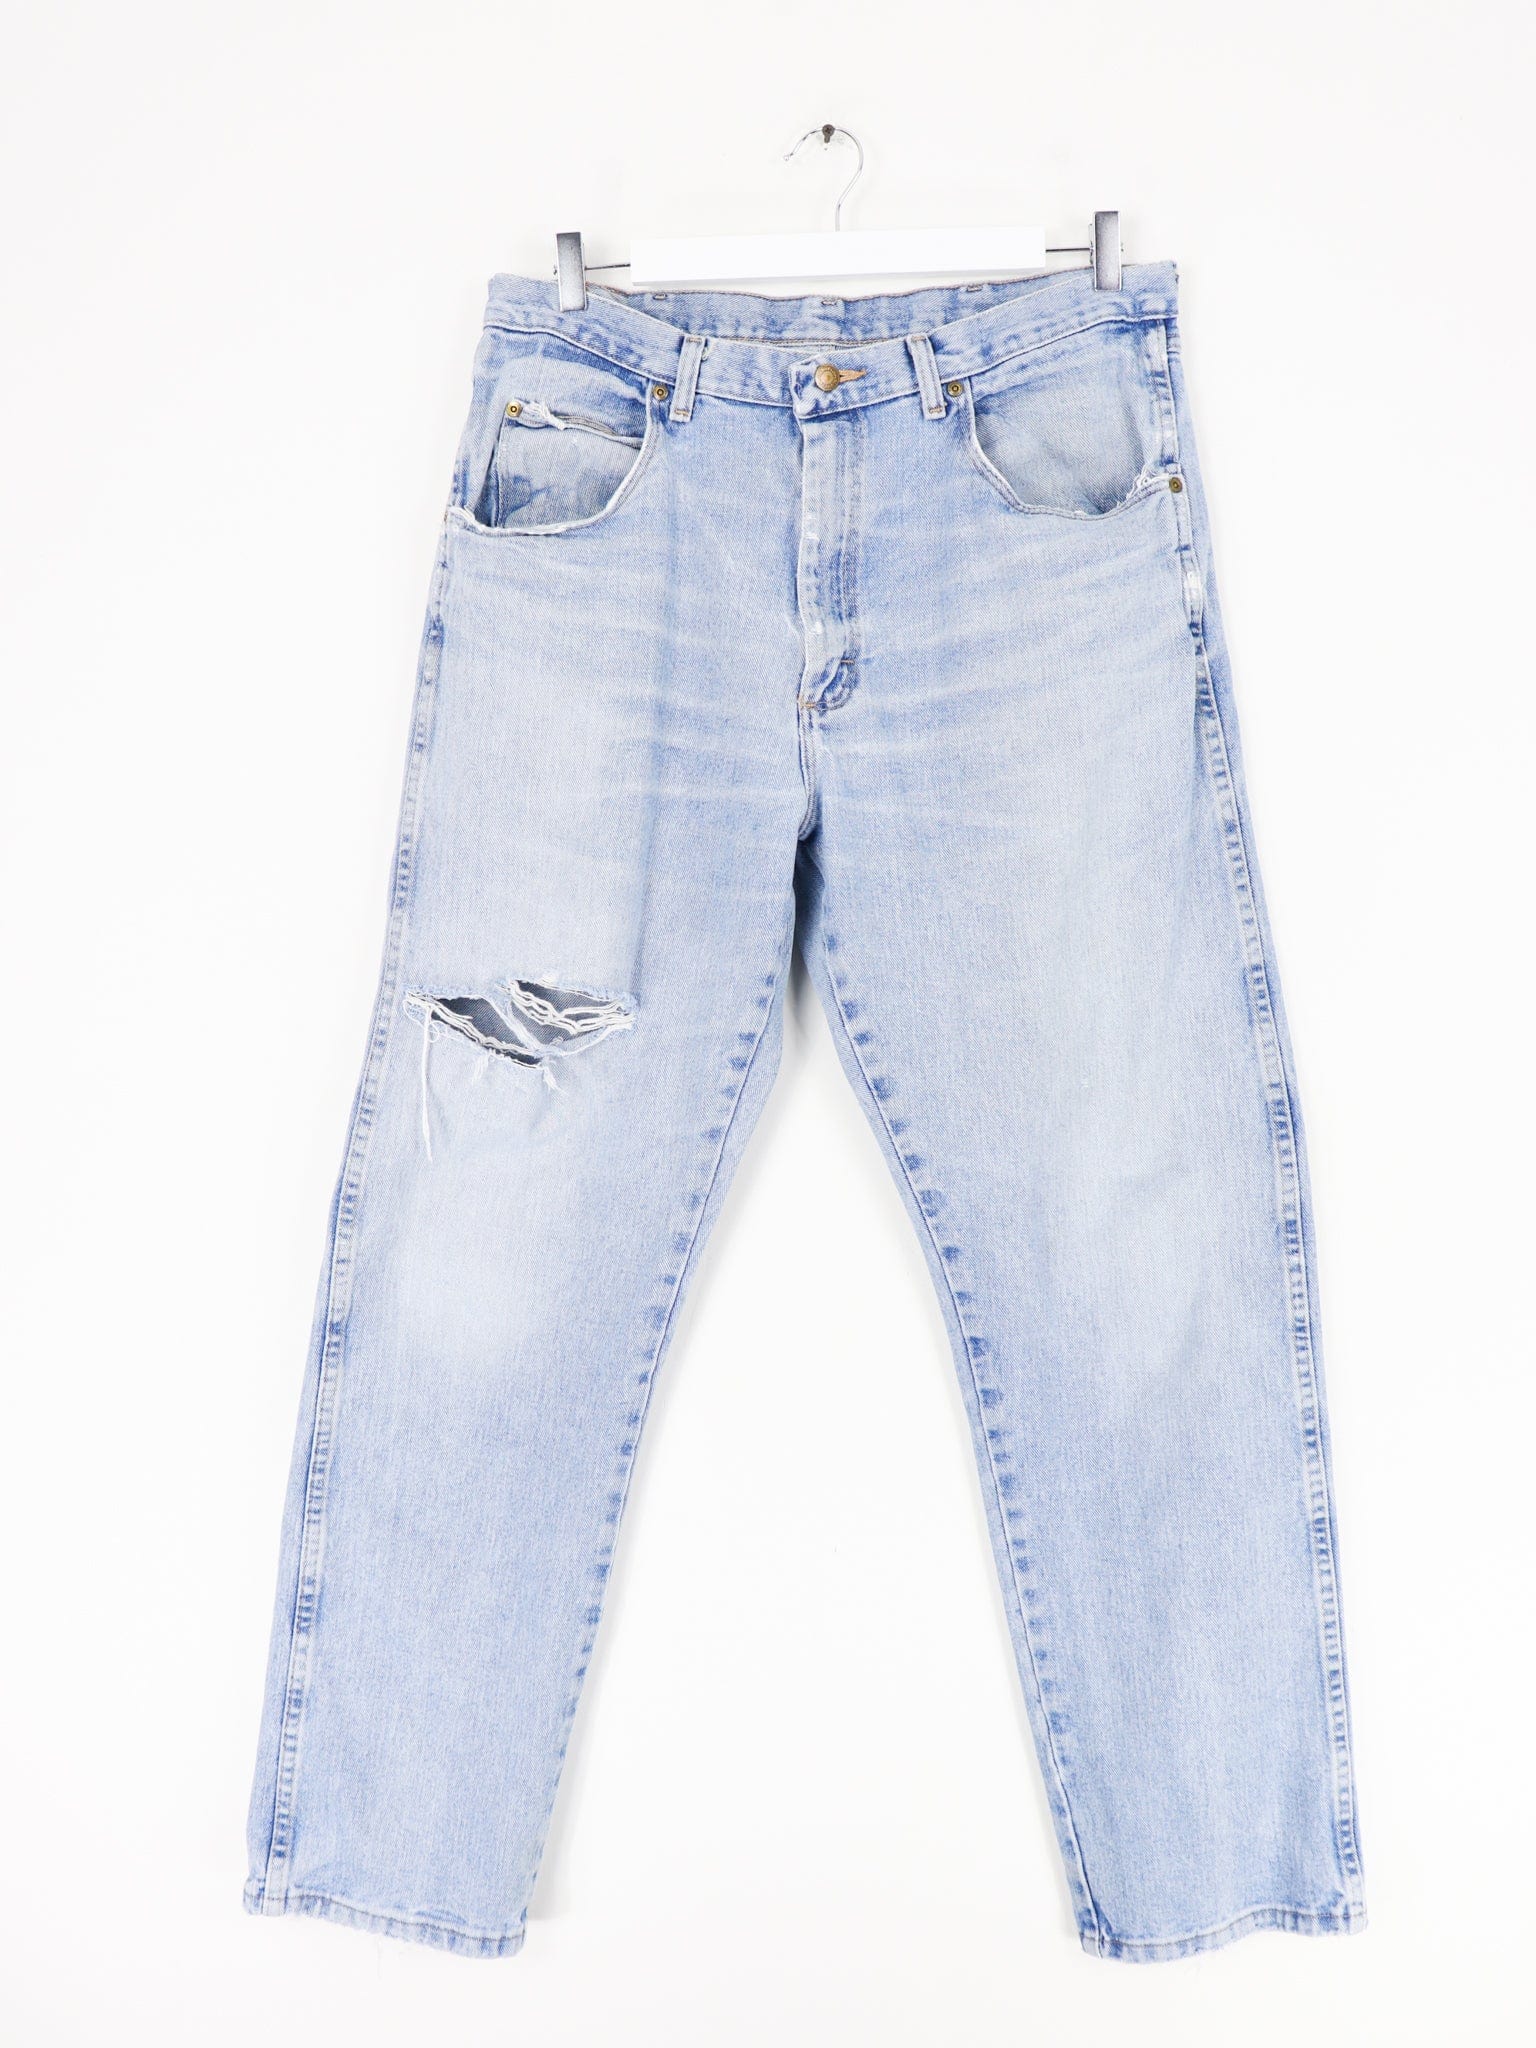 Vintage Wrangler Blues Distressed Denim Jeans Size 36 x 32